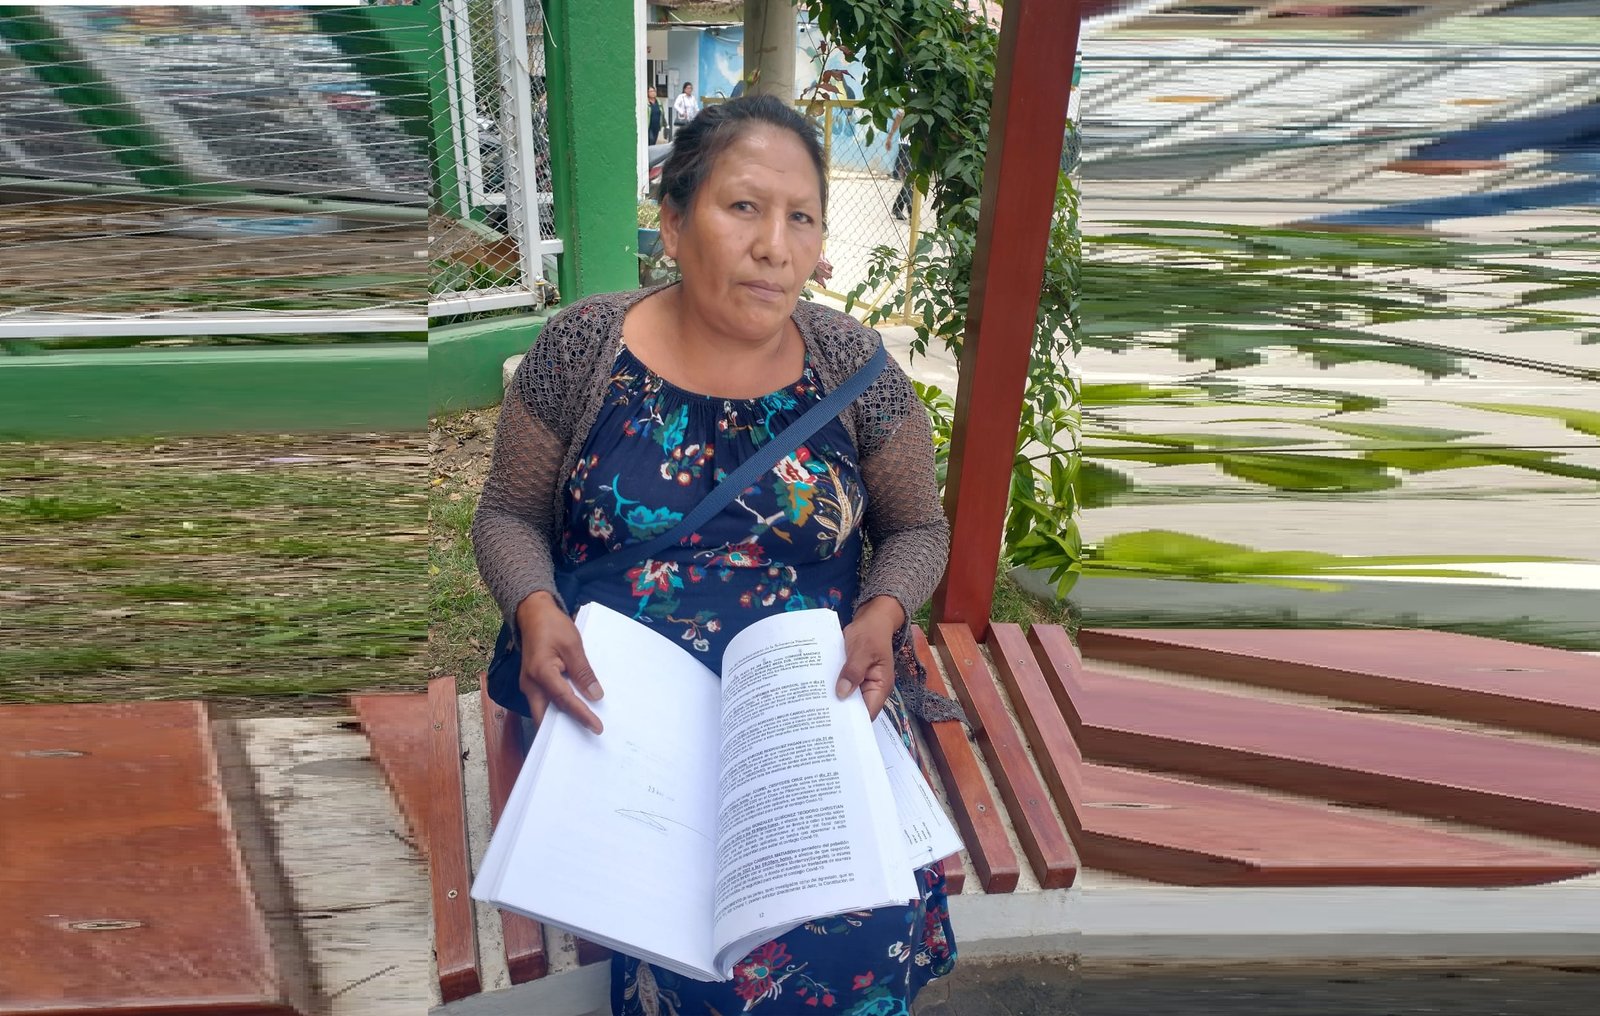 Madre de preso que murió tras recibir golpiza de agentes del Inpe espera justicia